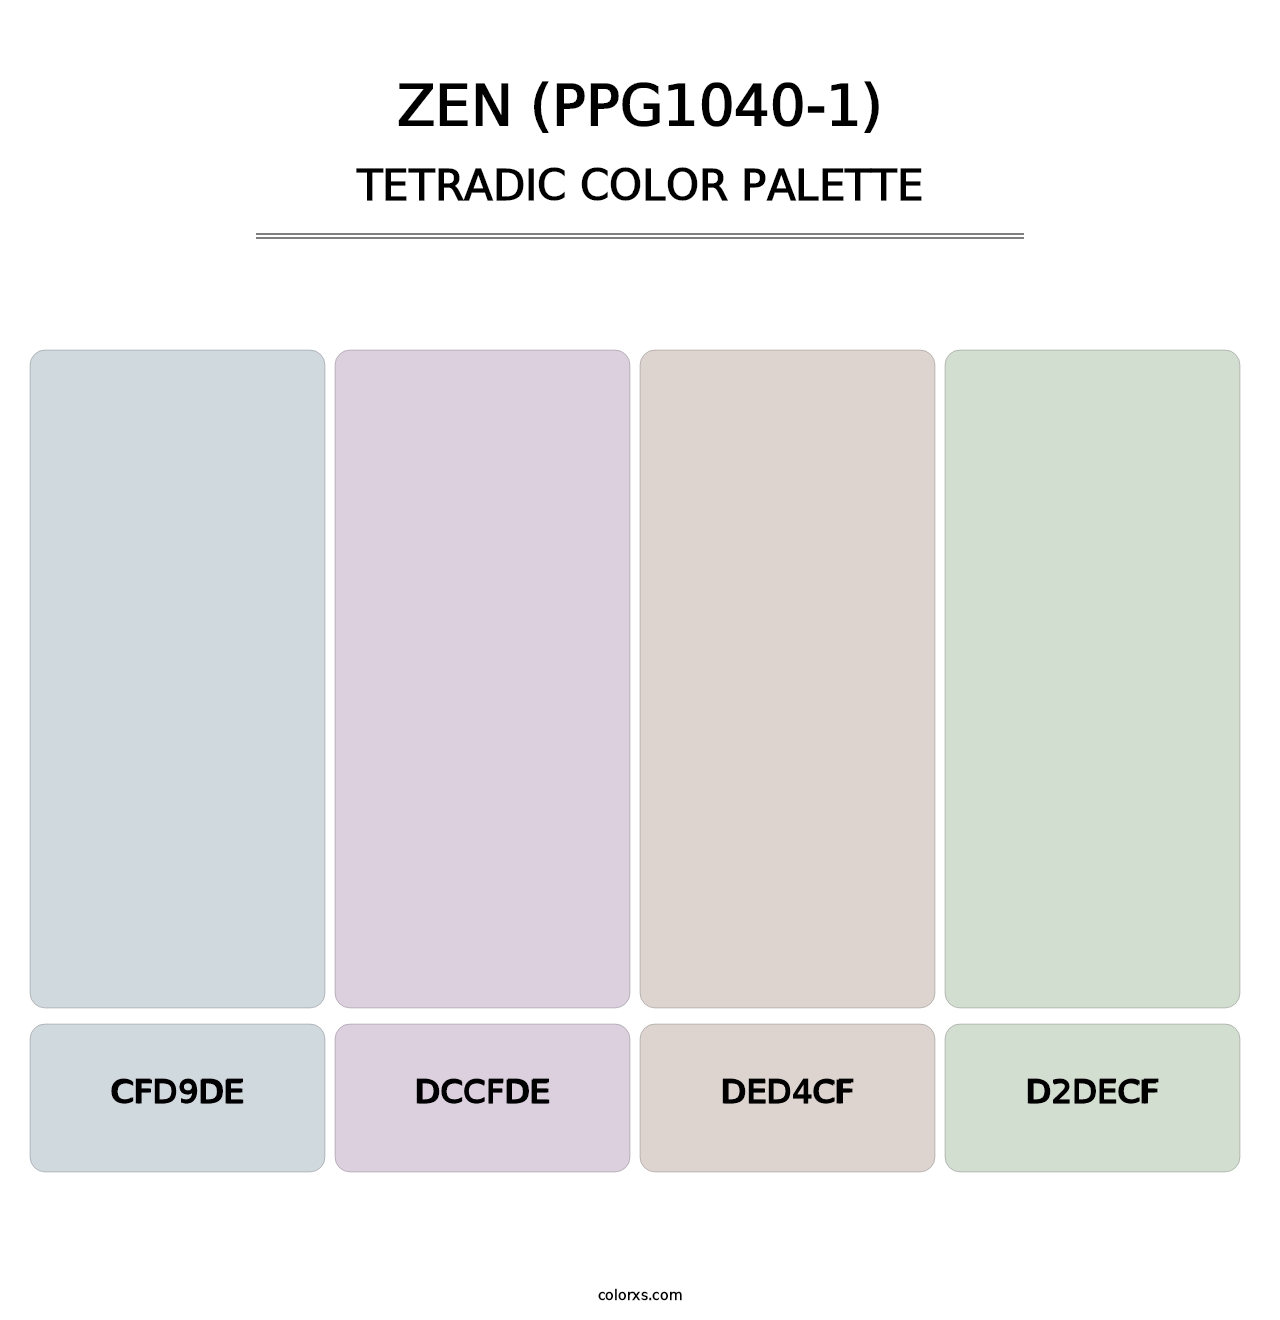 Zen (PPG1040-1) - Tetradic Color Palette